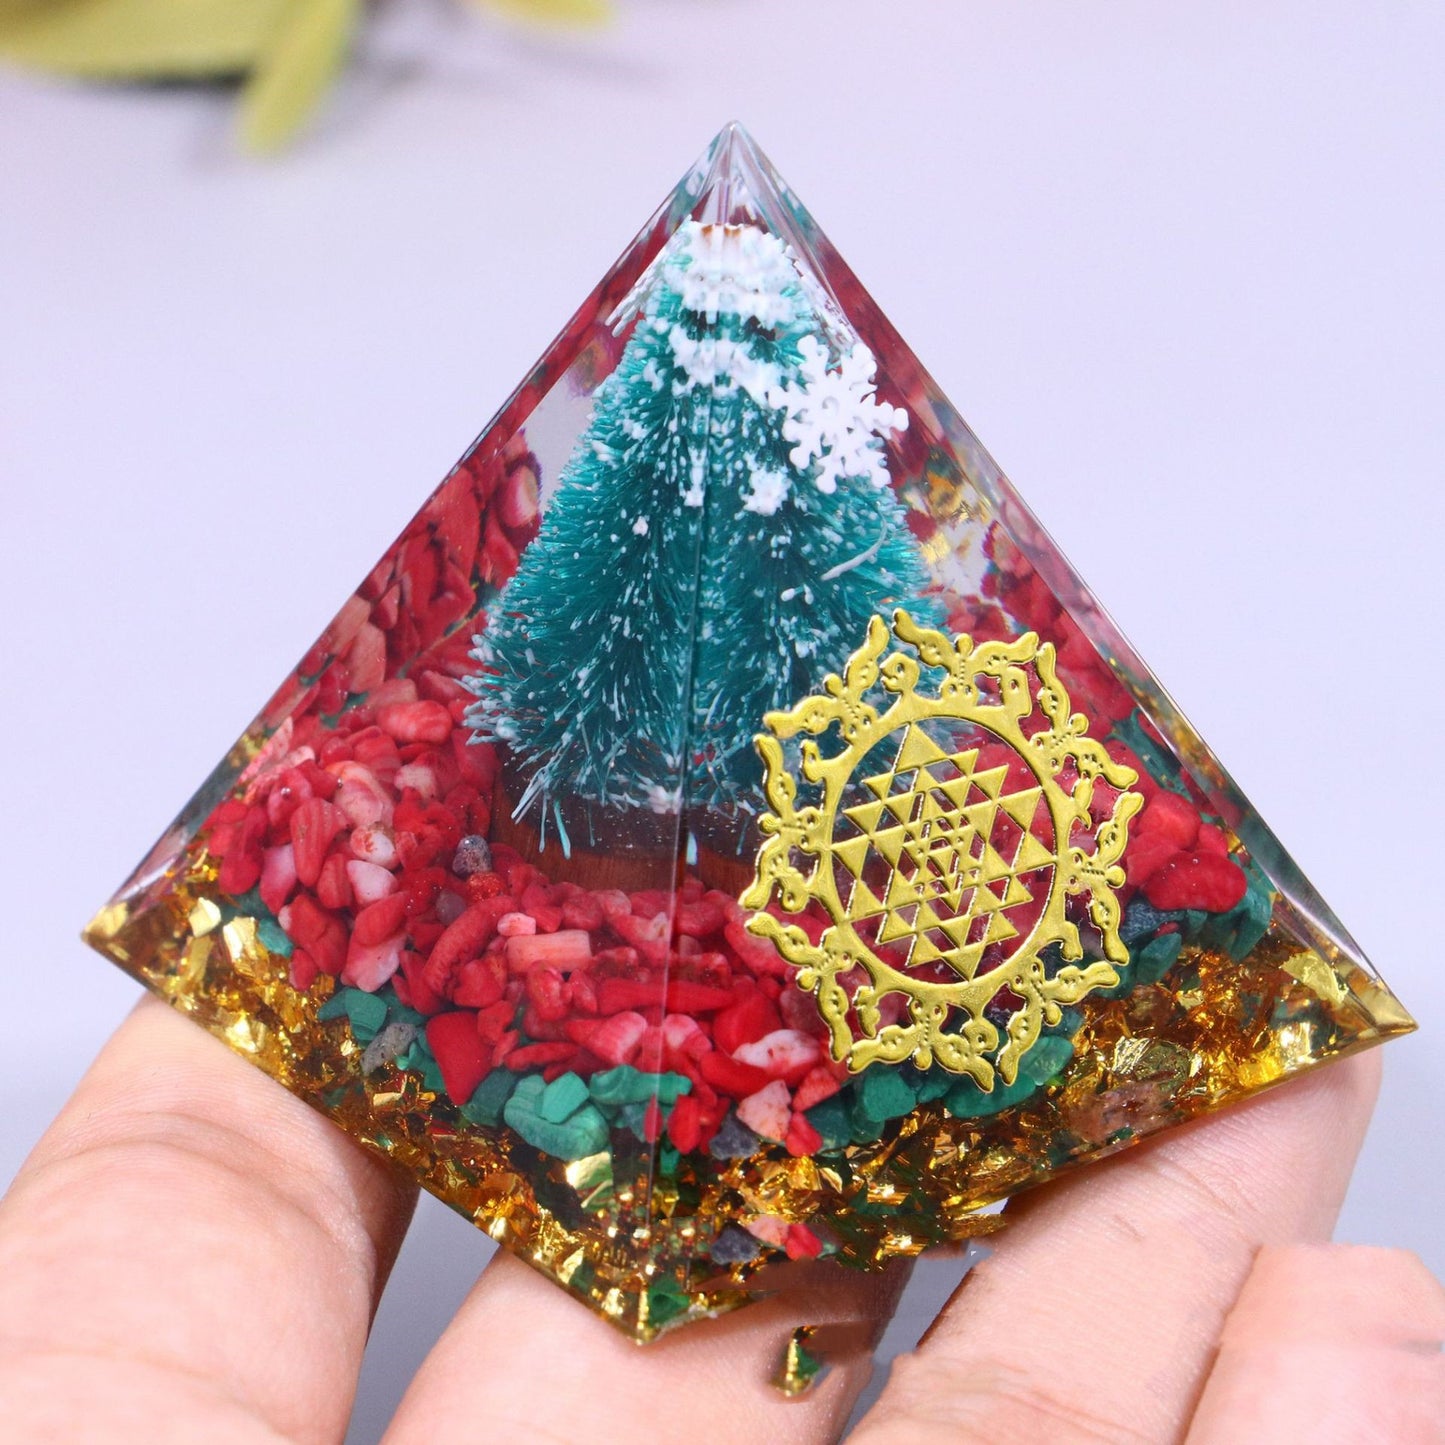 Crystal Pyramid Christmas Handmade Ornaments